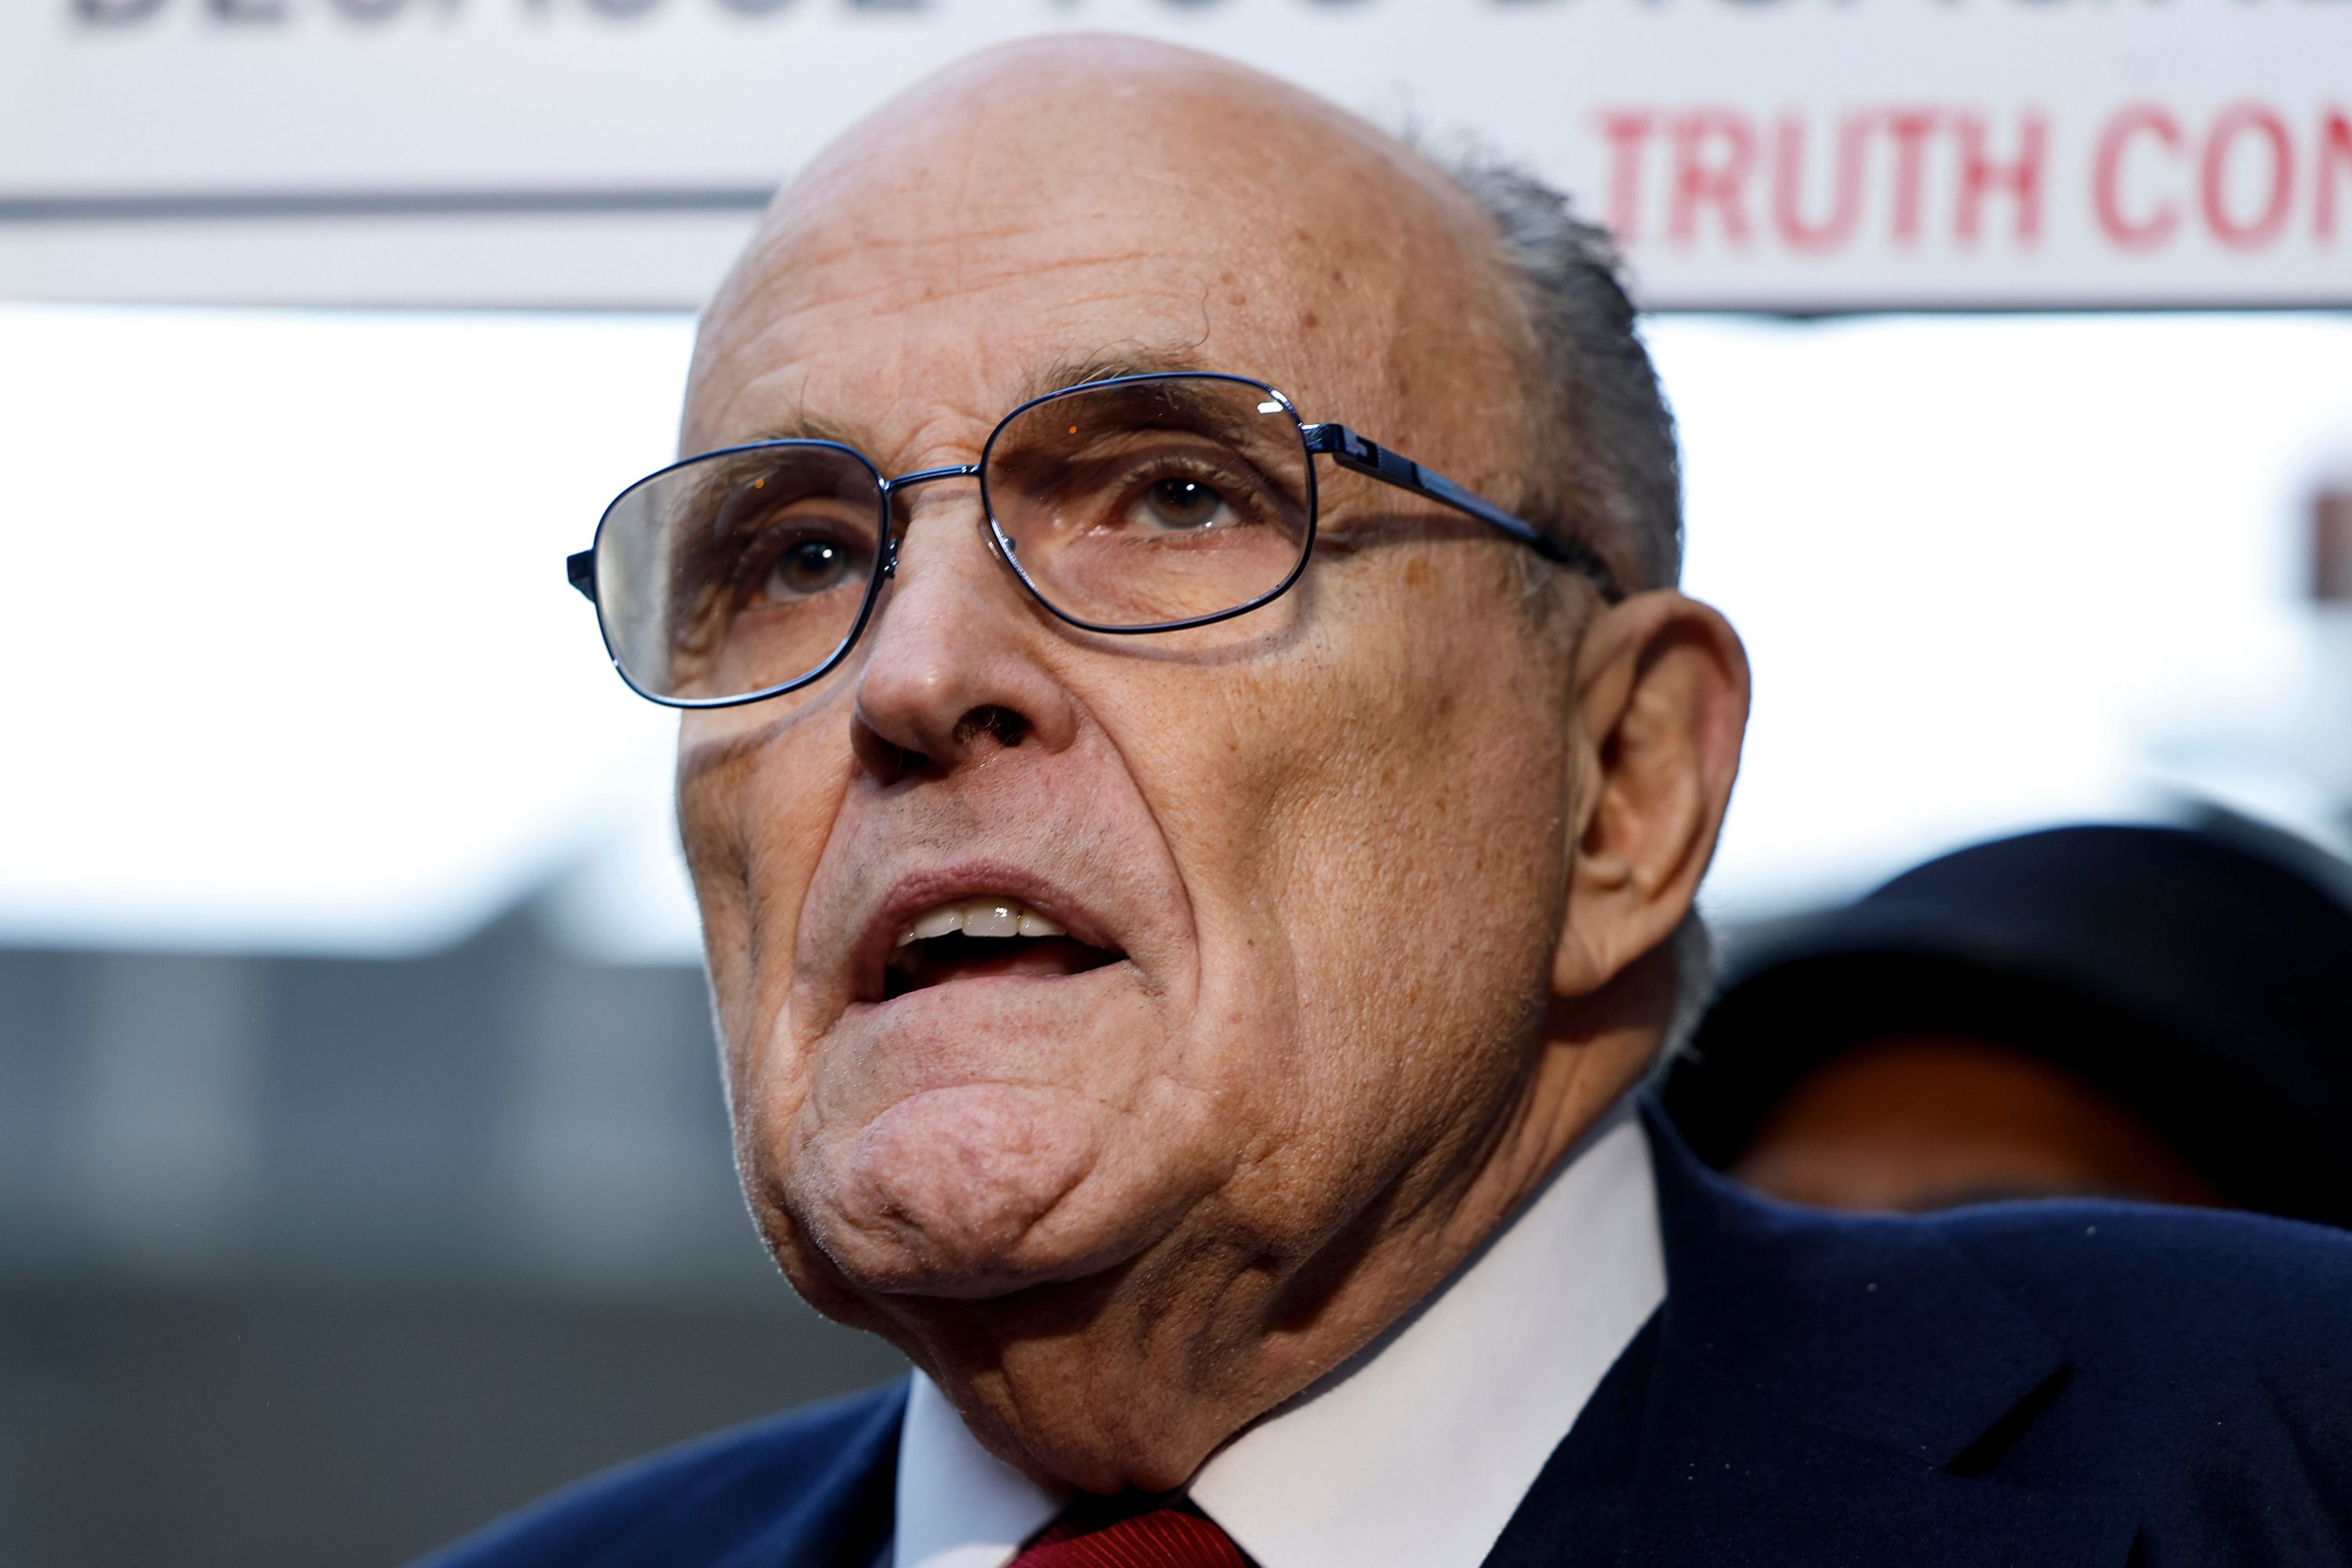 Rudy Giuliani says earthquakes targeting “communist” US states